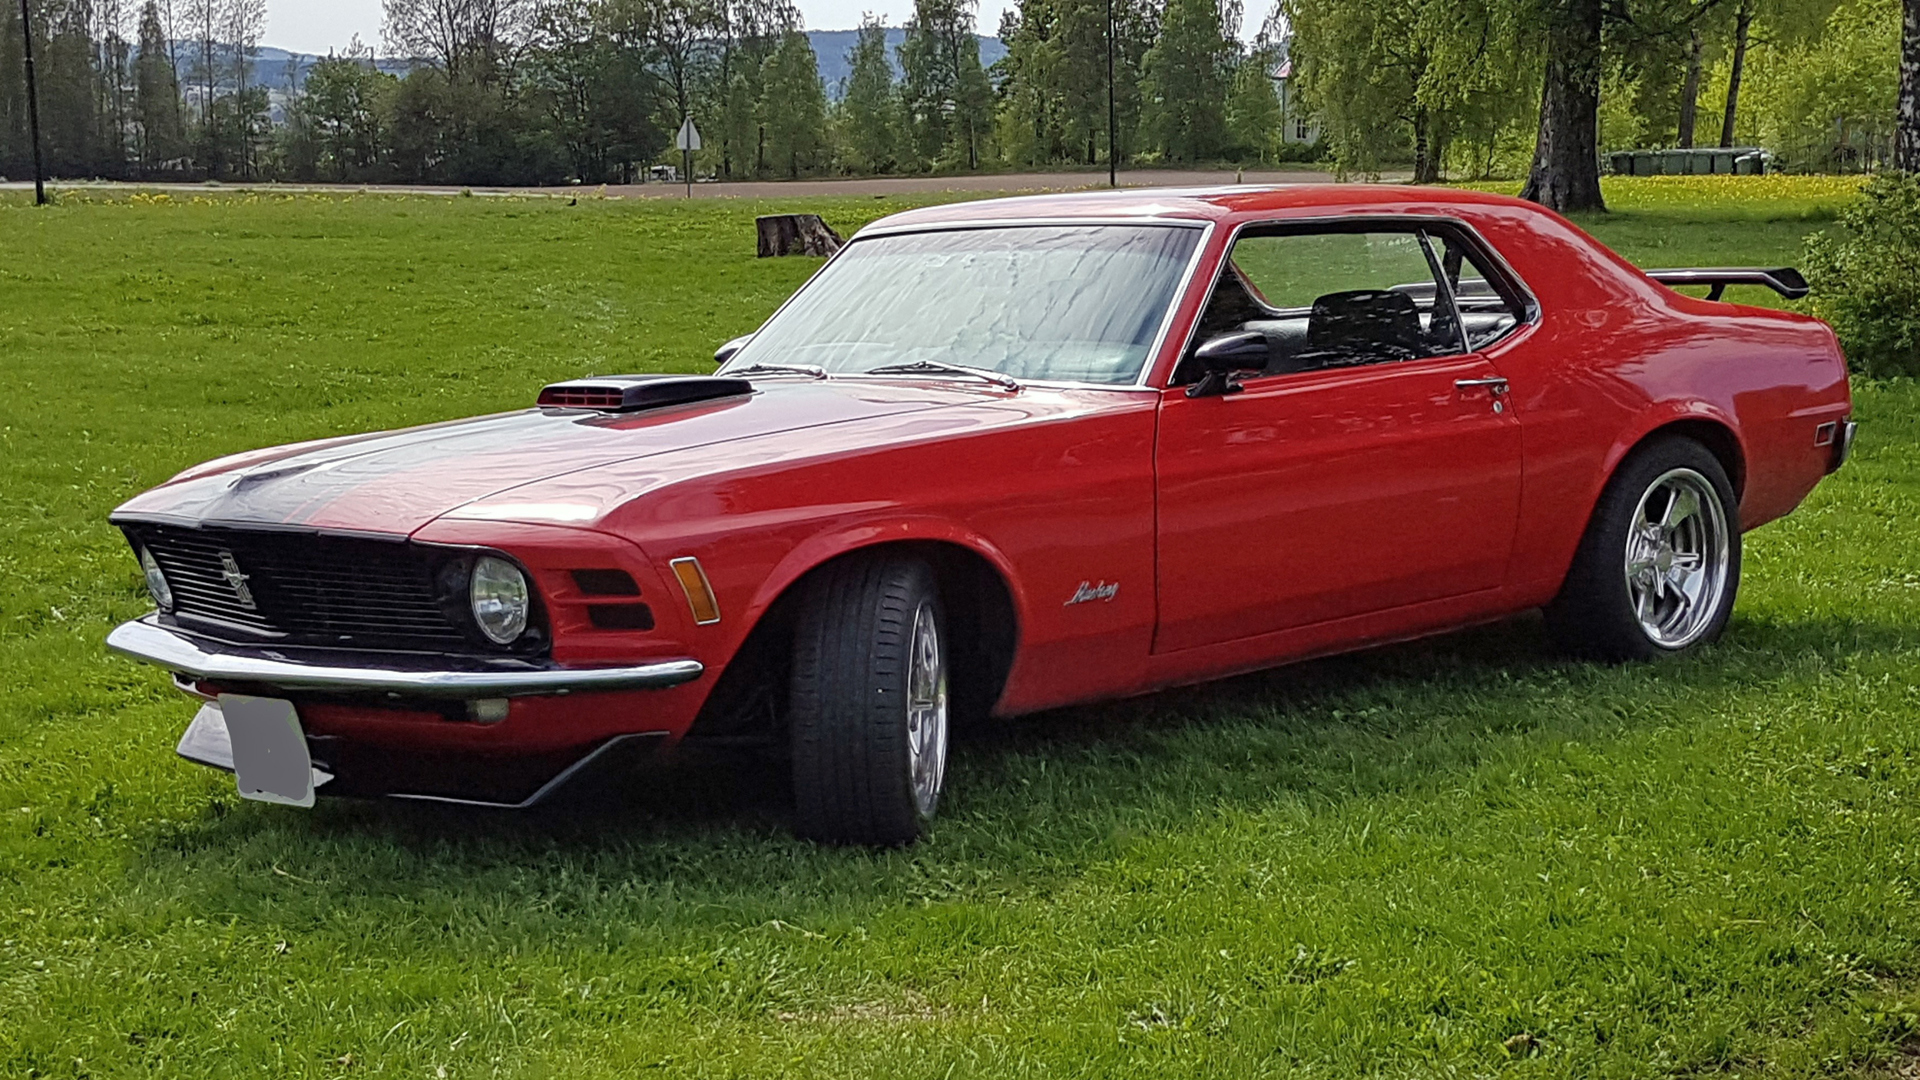 269-1970 Ford Mustang Hardtop 01. Eier- medlem 269